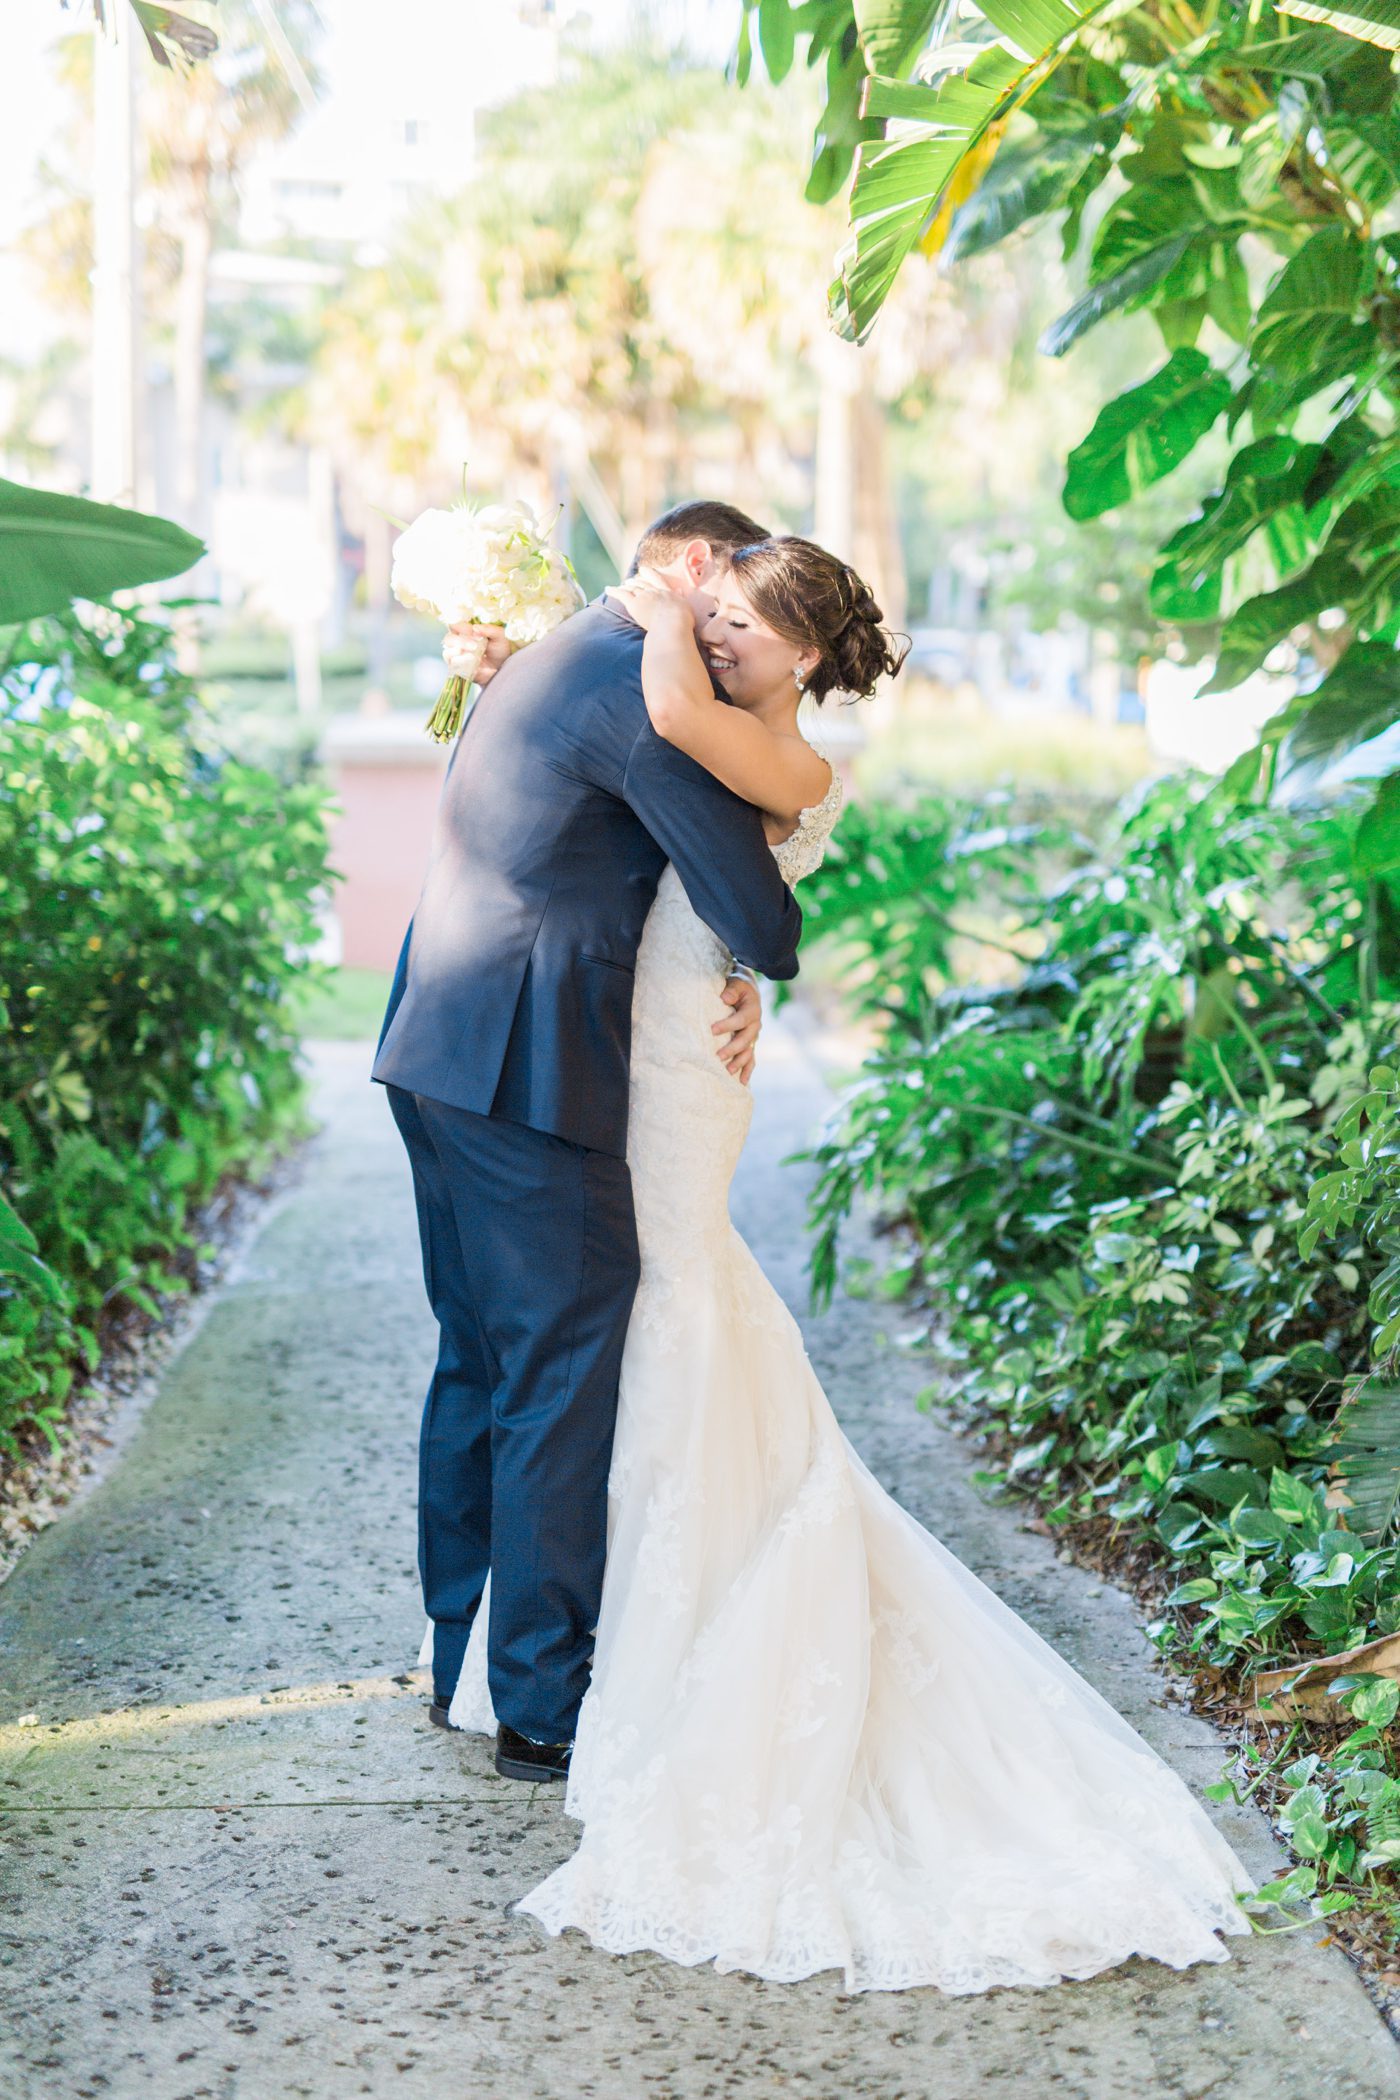 Florida wedding pictures | Vinoy renaissance wedding photos | St Petersburg FL wedding photographersCatherine Ann Photography